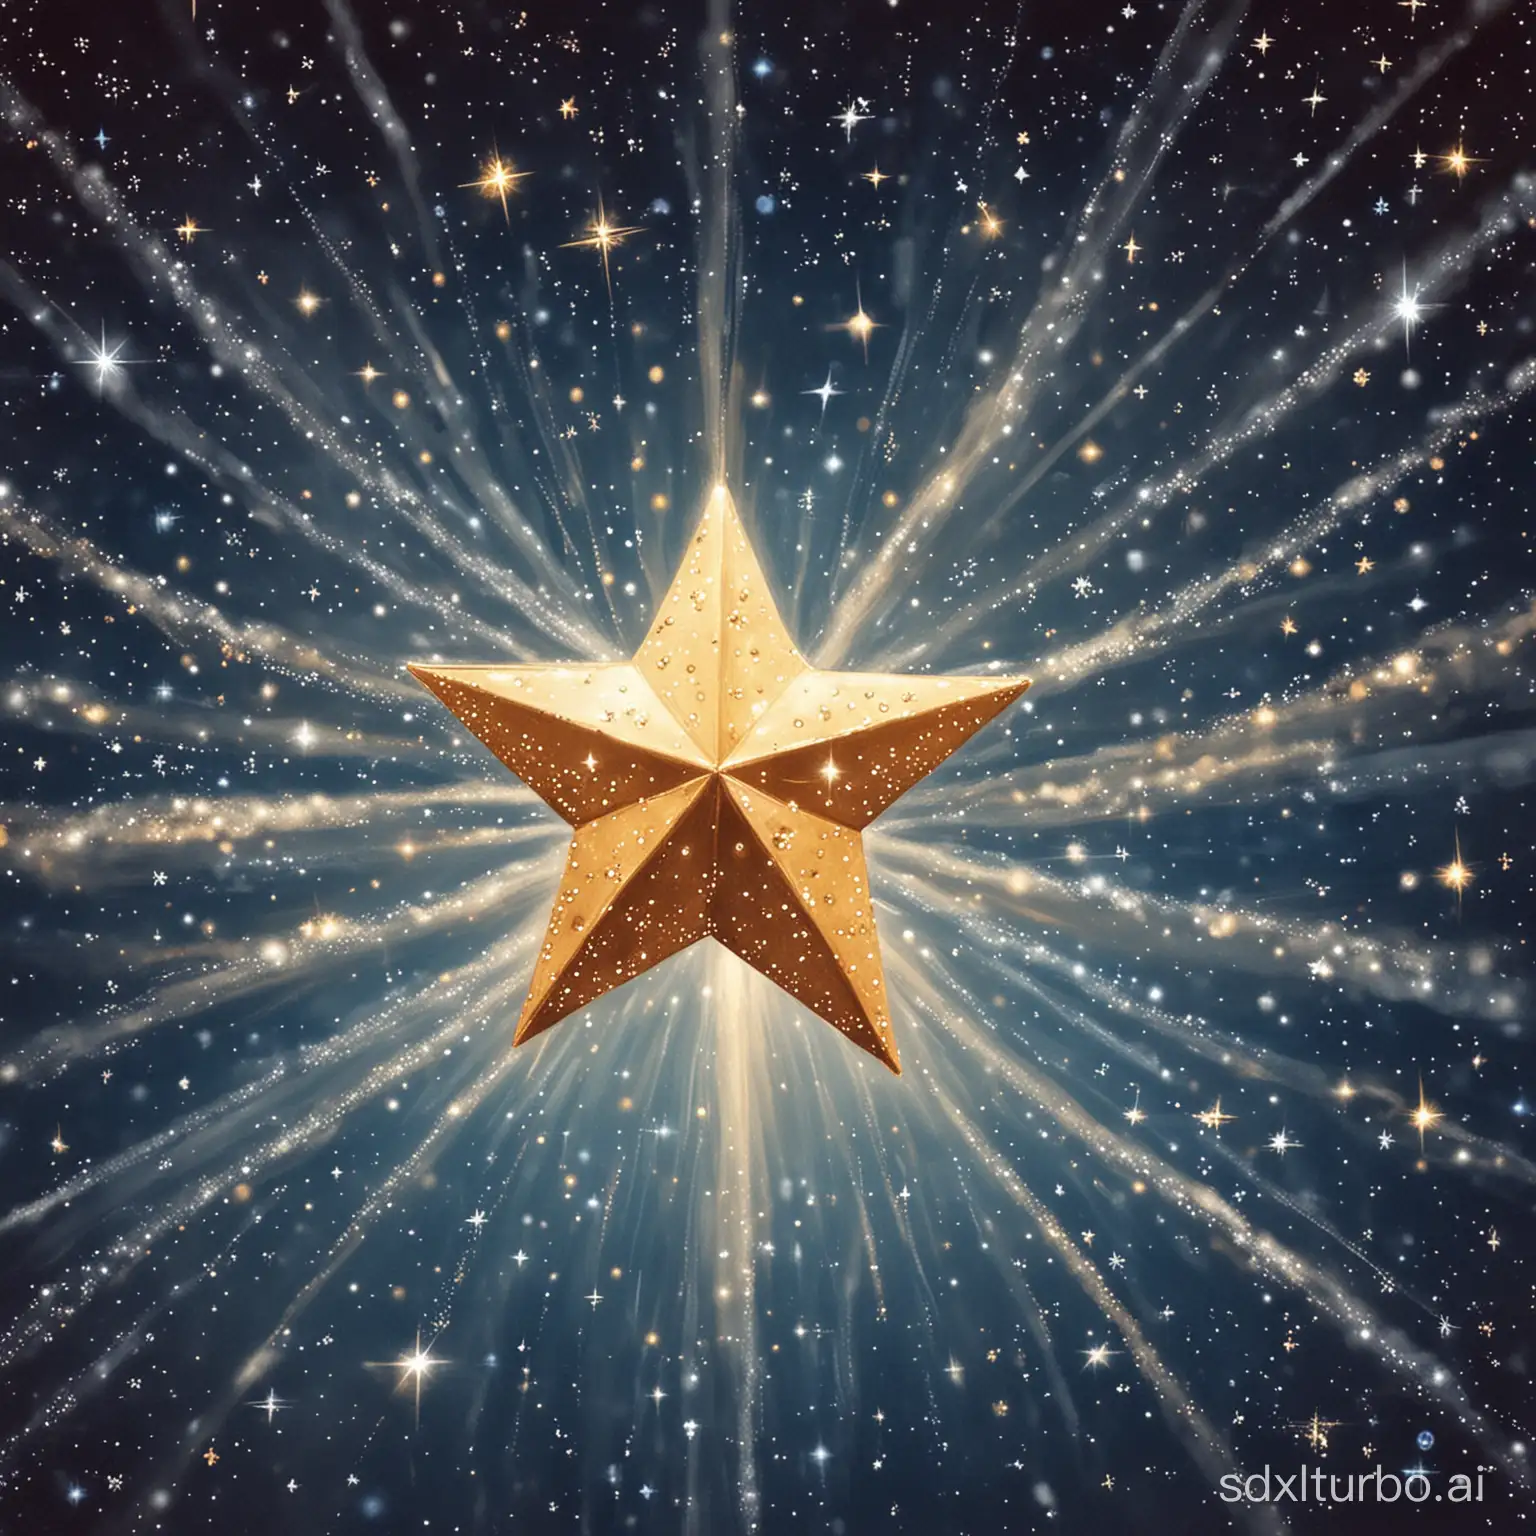 Starry-Night-Sky-with-Twinkling-Little-Star-Art